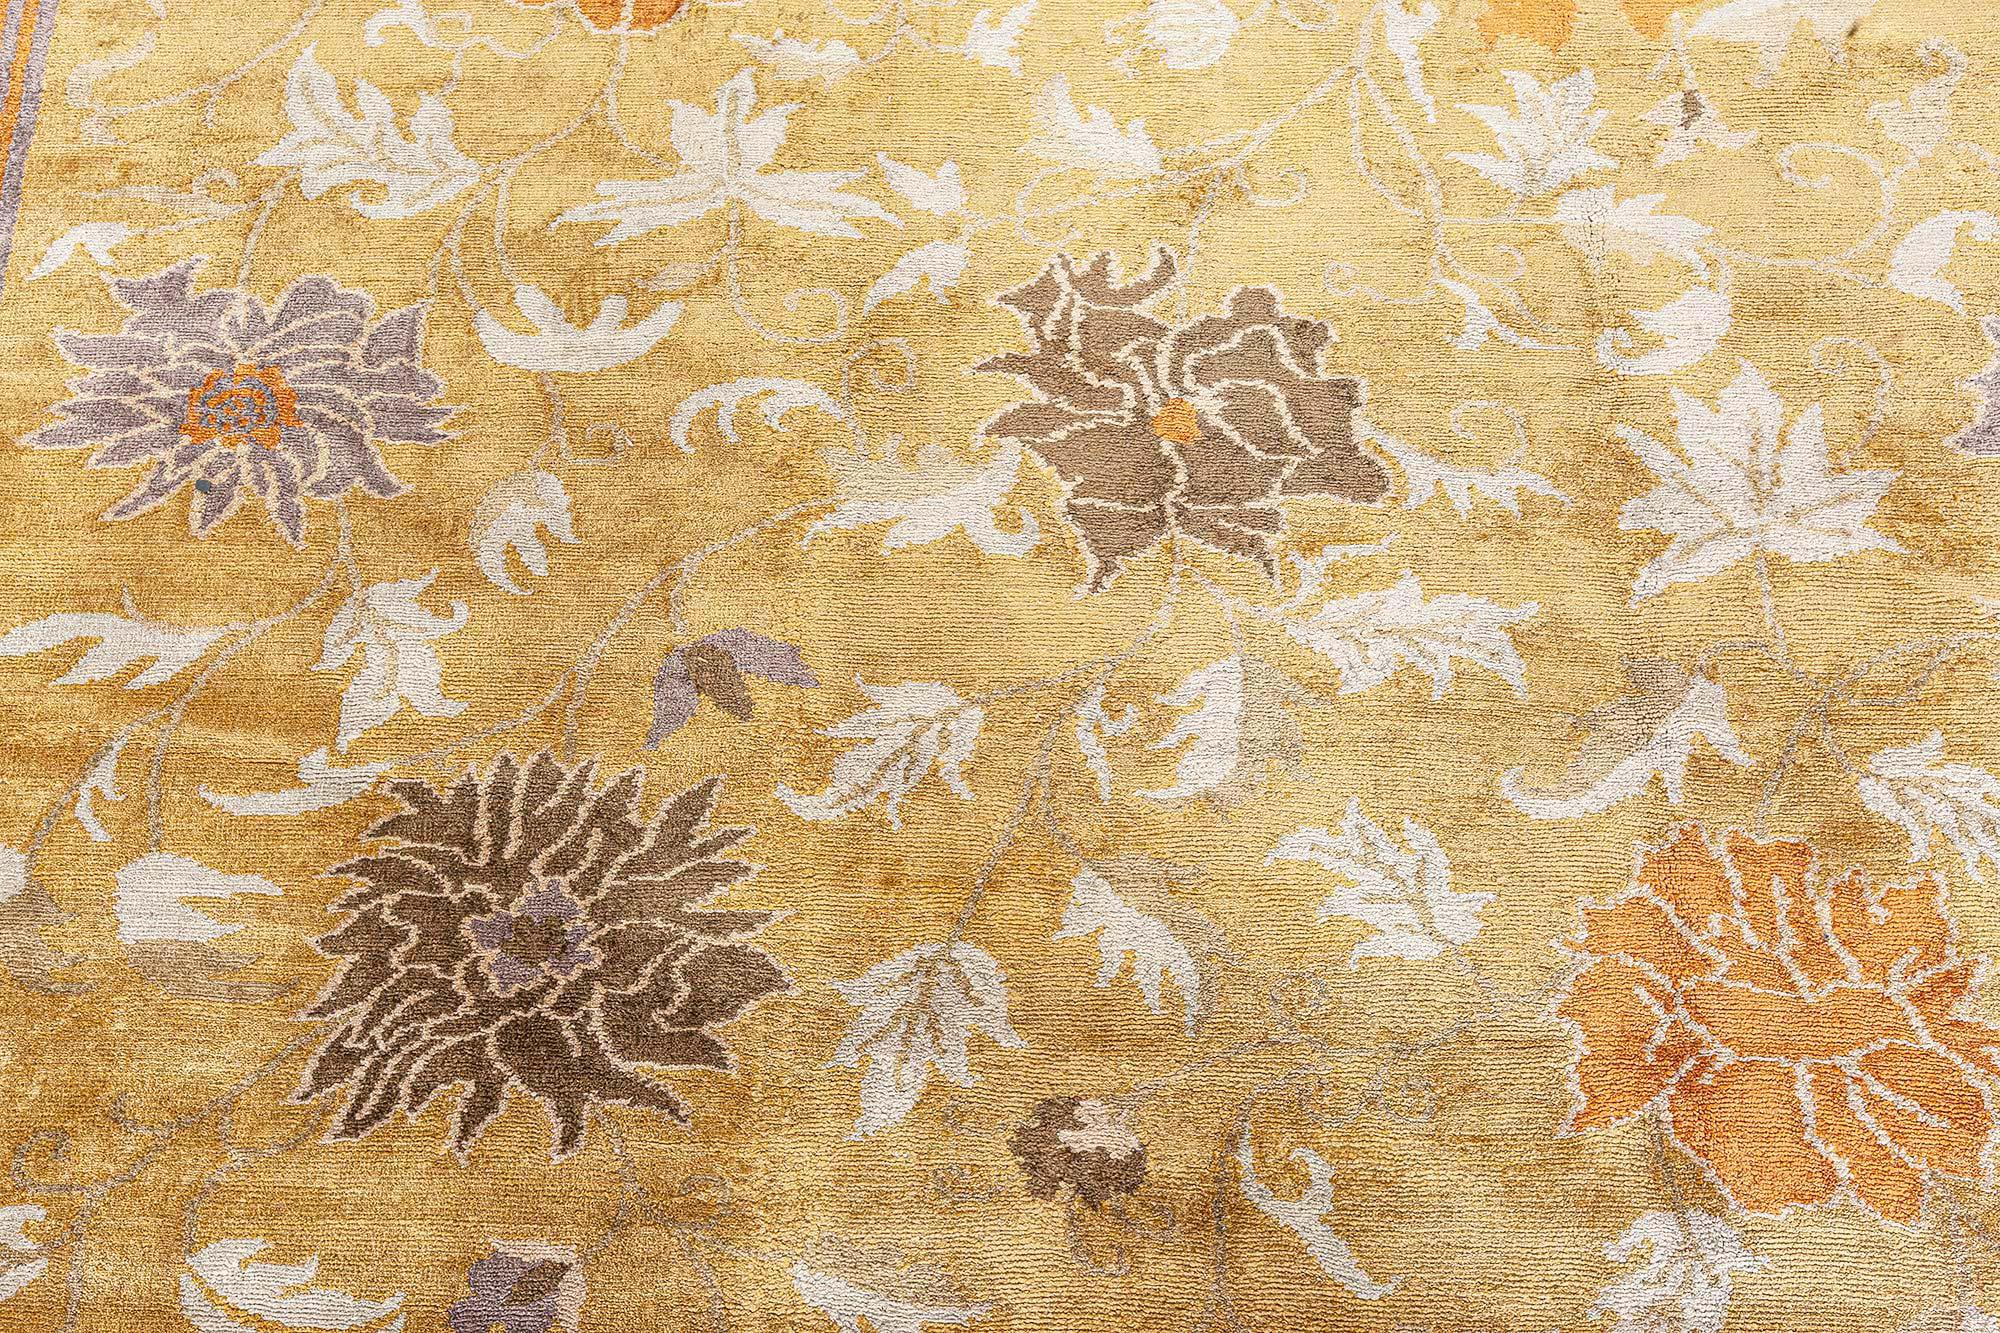 Contemporary lotus design silk rug by Doris Leslie Blau.
Size: 9'0